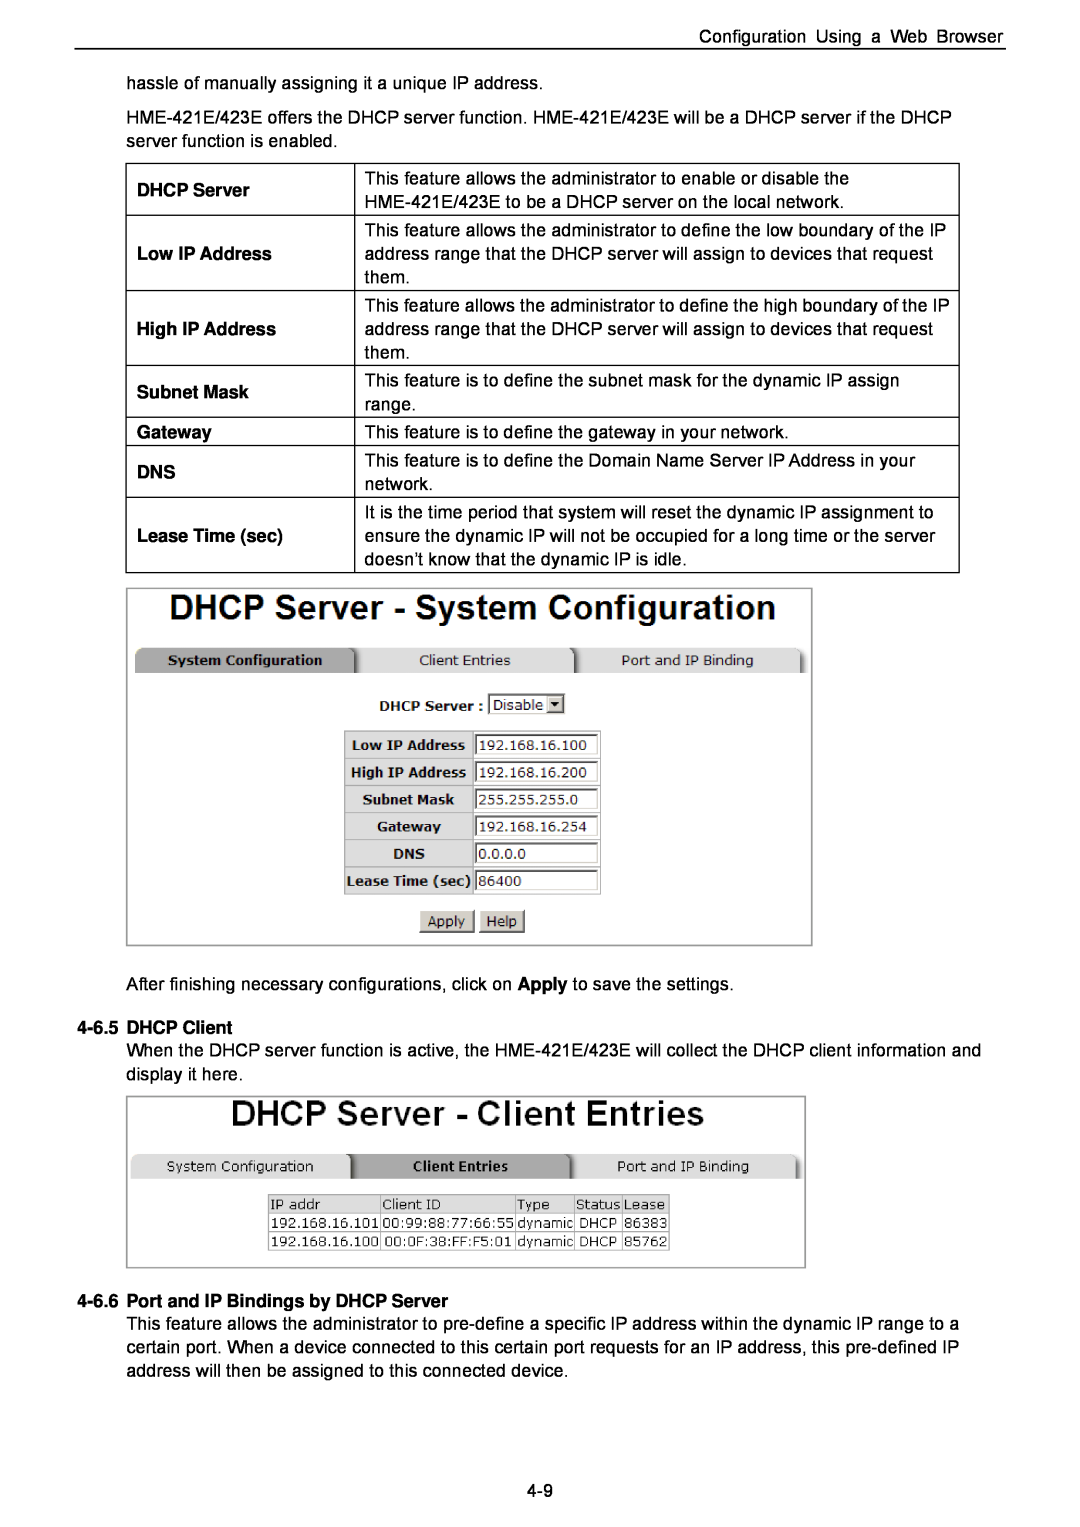 Husky HME-423E, HME-421E DHCP Server, Low IP Address, High IP Address, Subnet Mask, Gateway, Lease Time sec, DHCP Client 